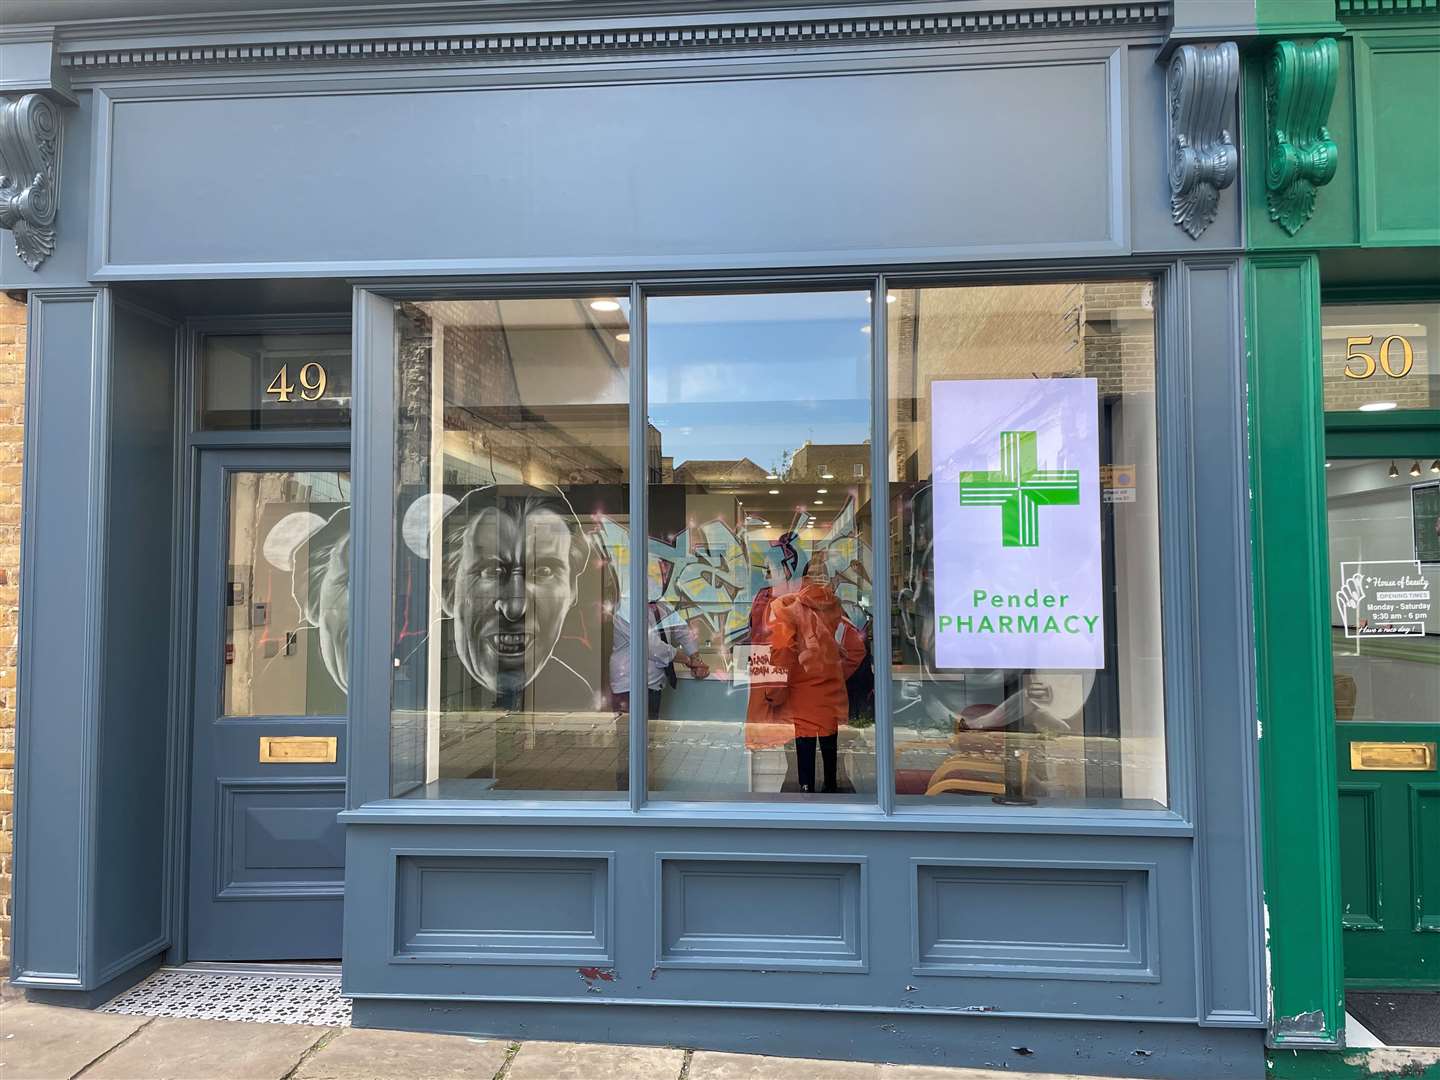 Pender Pharmacy has opened at 49 High Street, Gravesend